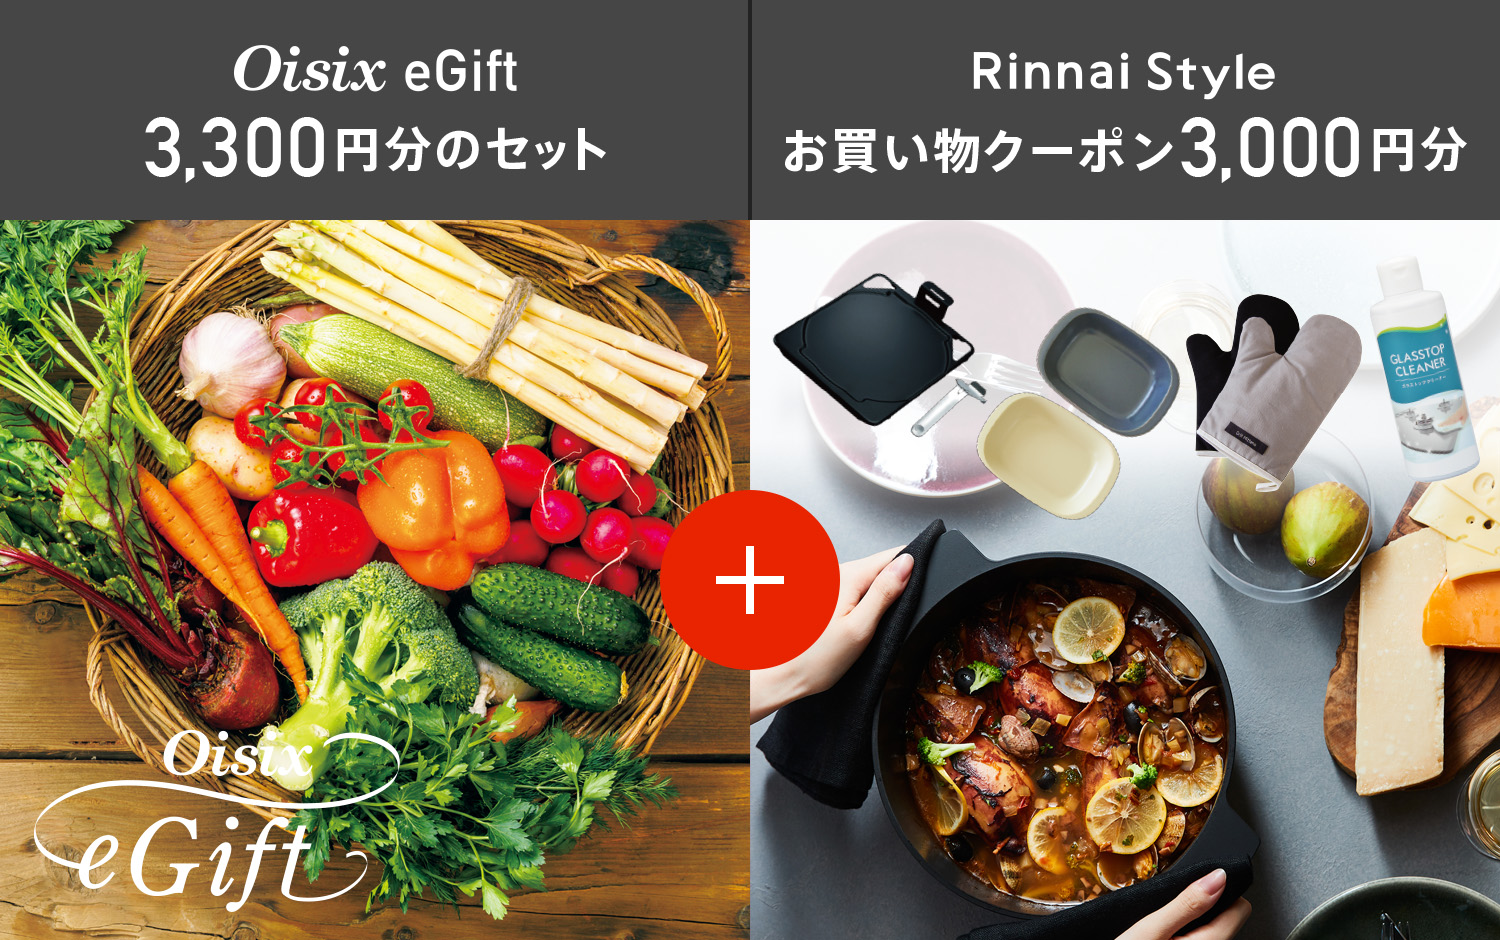 Oisix eGift 3,300円分のセット + Rinnai Style お買い物クーポン3,000円分